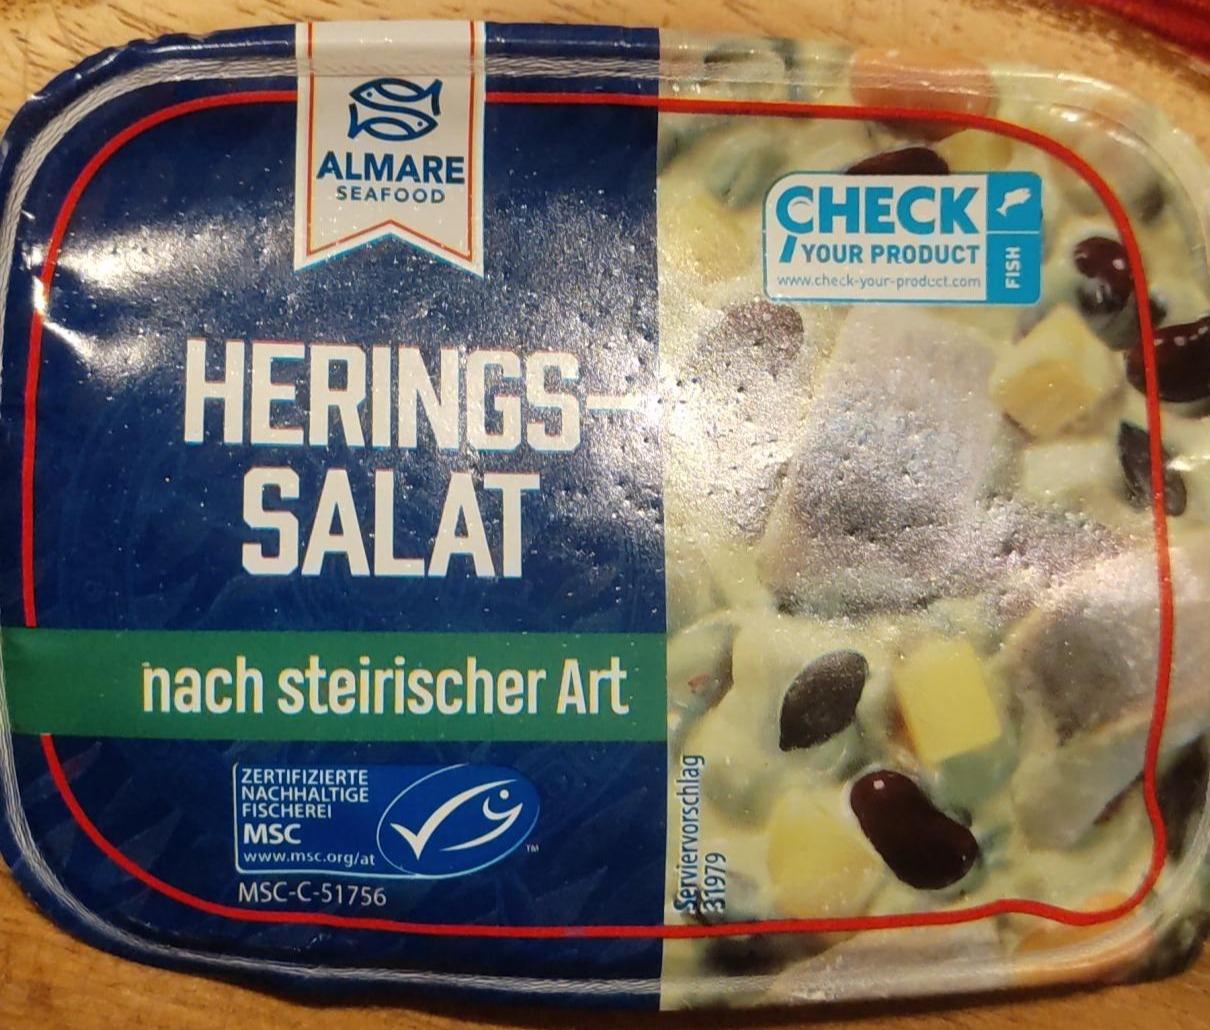 Fotografie - Herings-salat nach steirischer Art Almare Seafood